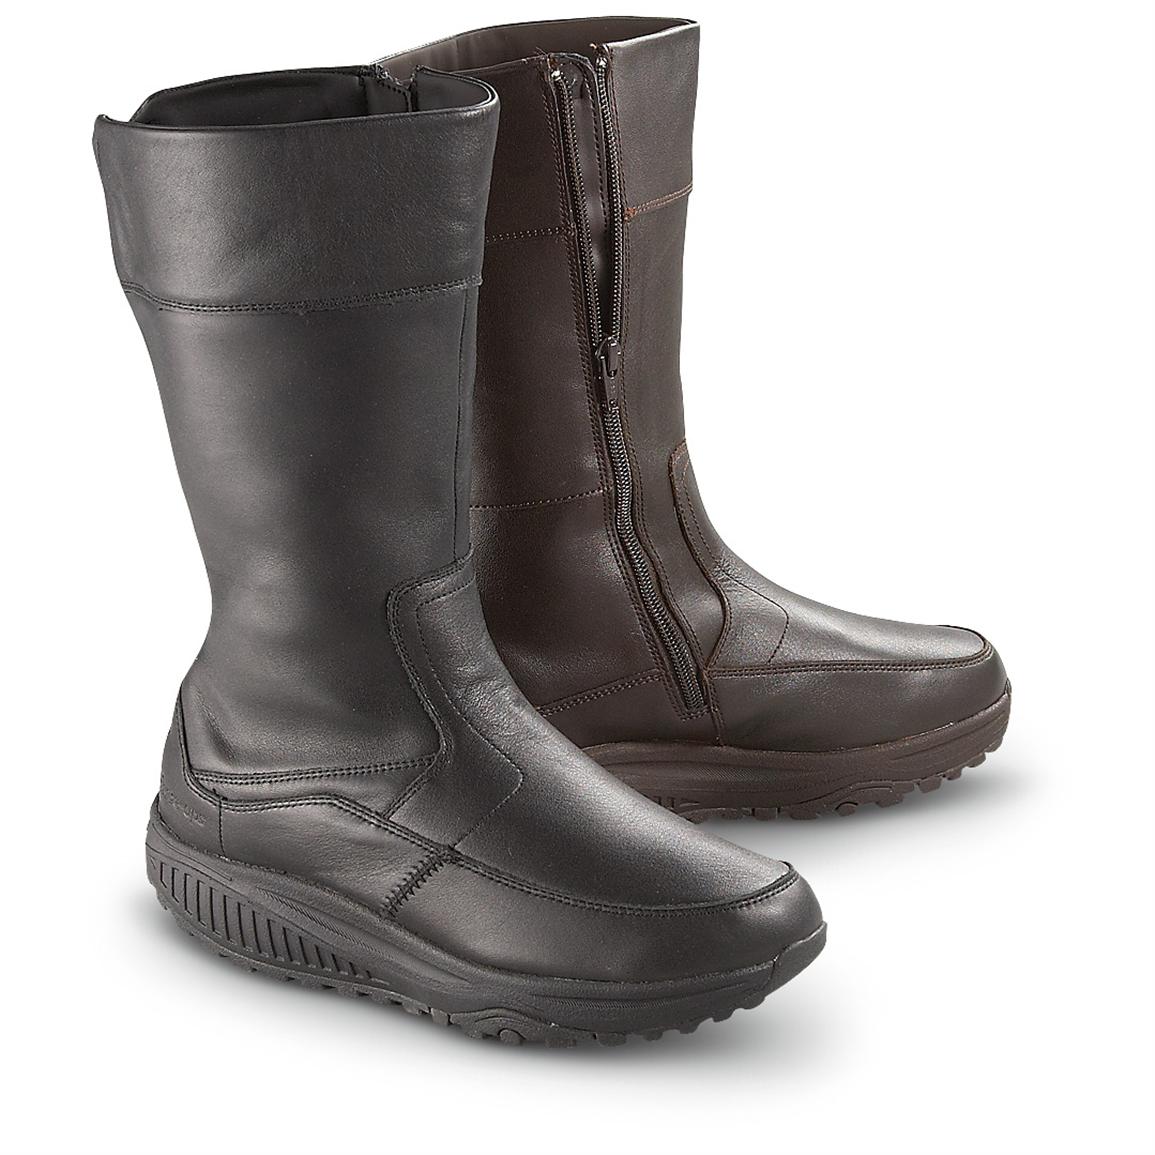 skechers shape up winter boots